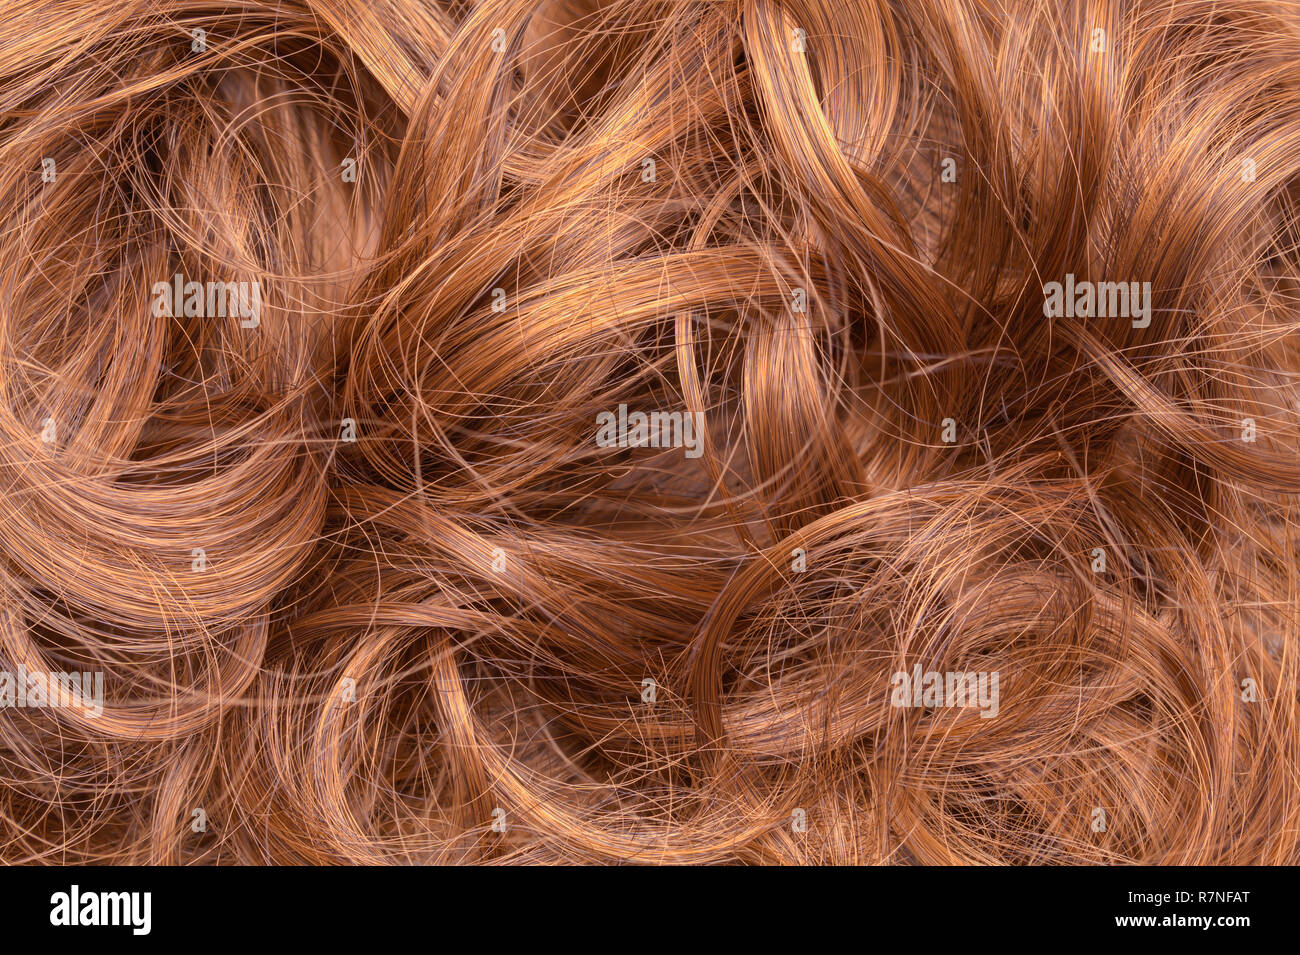 Brown Messy Hair Wig Bun Close Up. Stock Photo